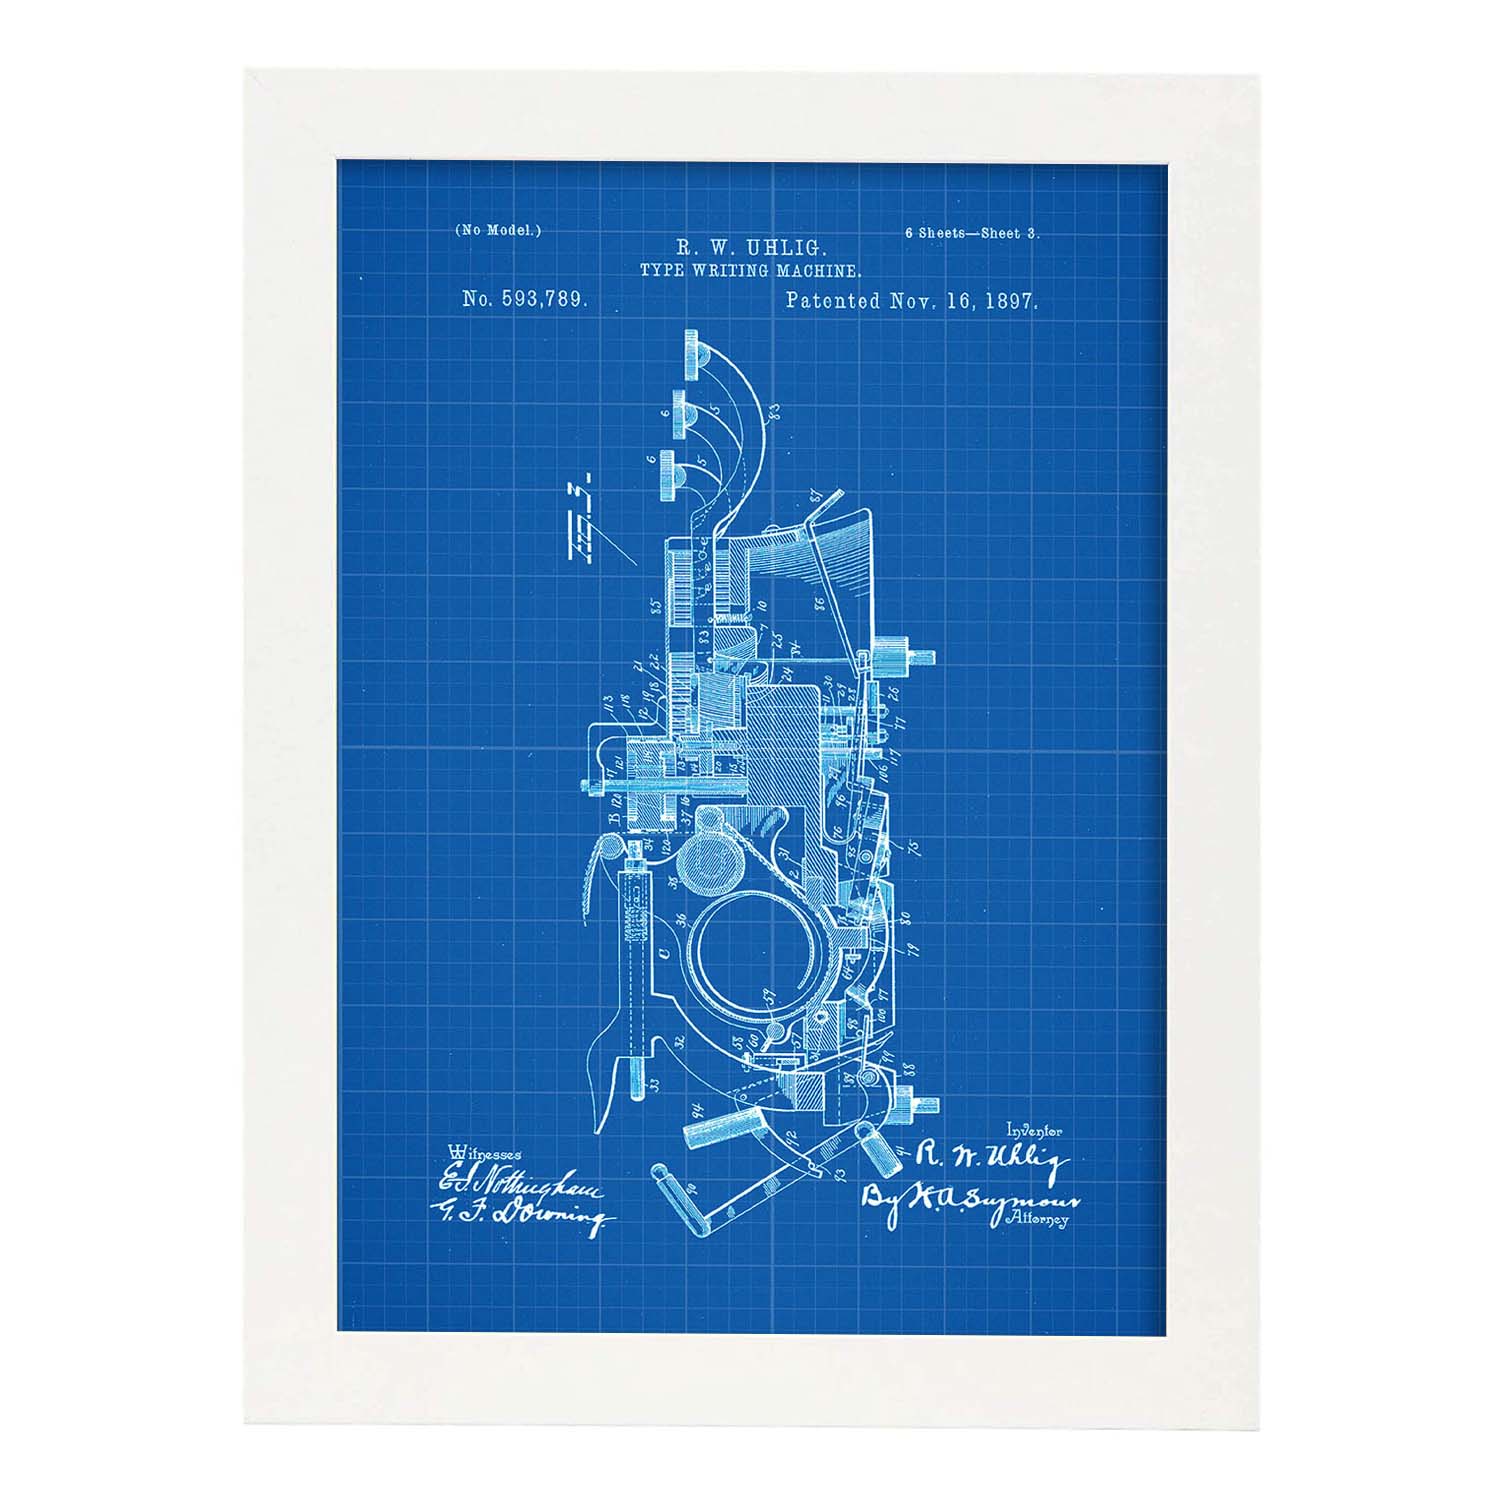 Poster con patente de Maquina de escribir 2. Lámina con diseño de patente antigua-Artwork-Nacnic-A3-Marco Blanco-Nacnic Estudio SL